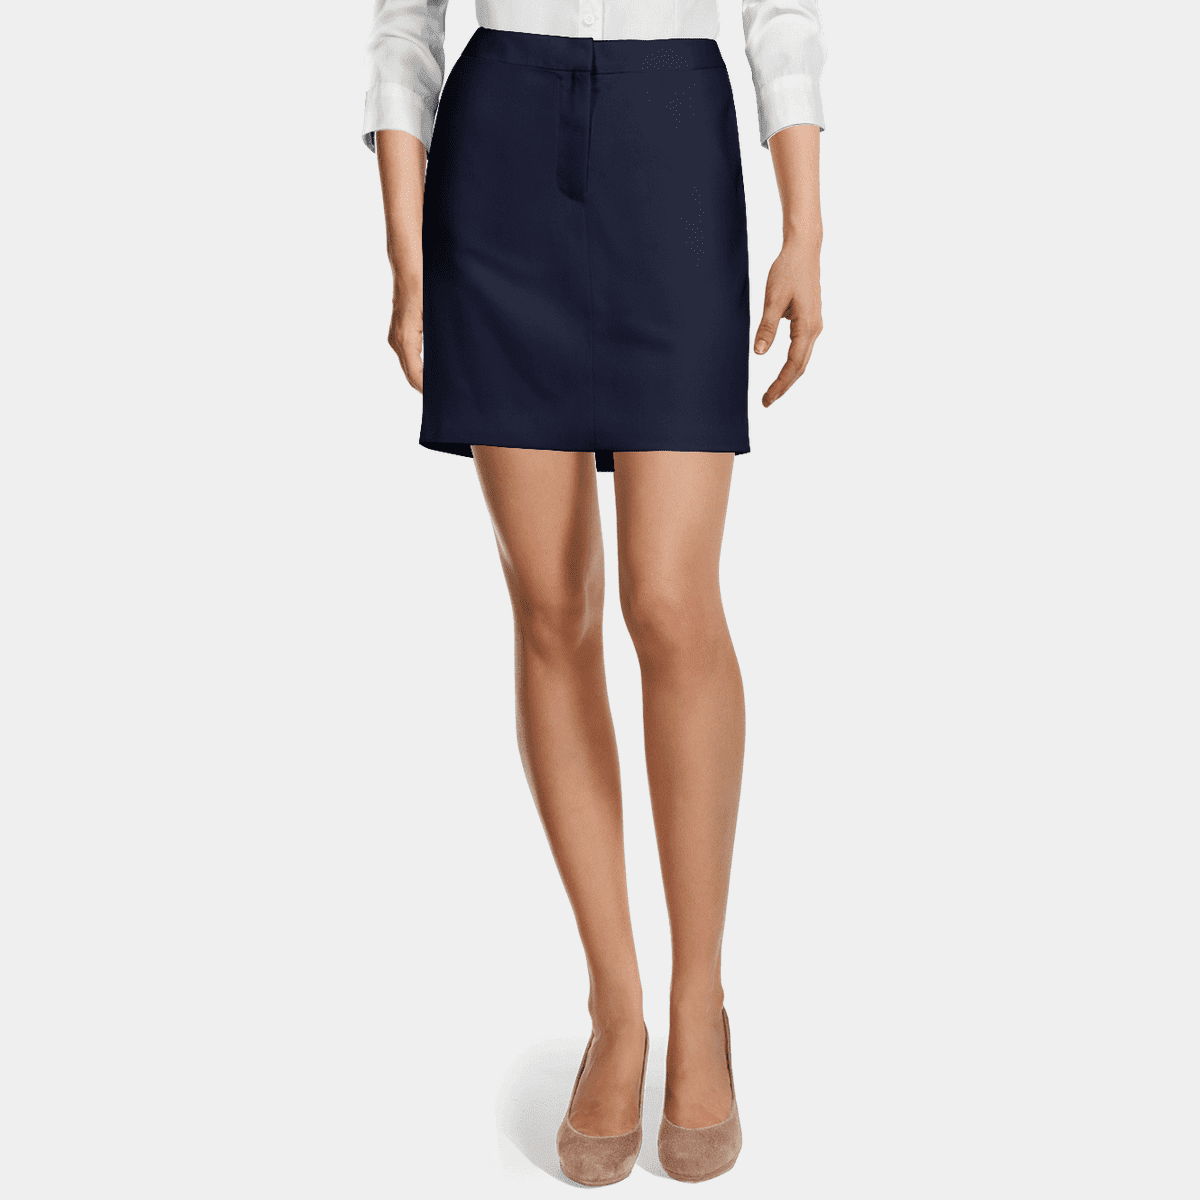 Senior Girls Navy/Maroon Tartan Skirt | Belmont High Uniforms